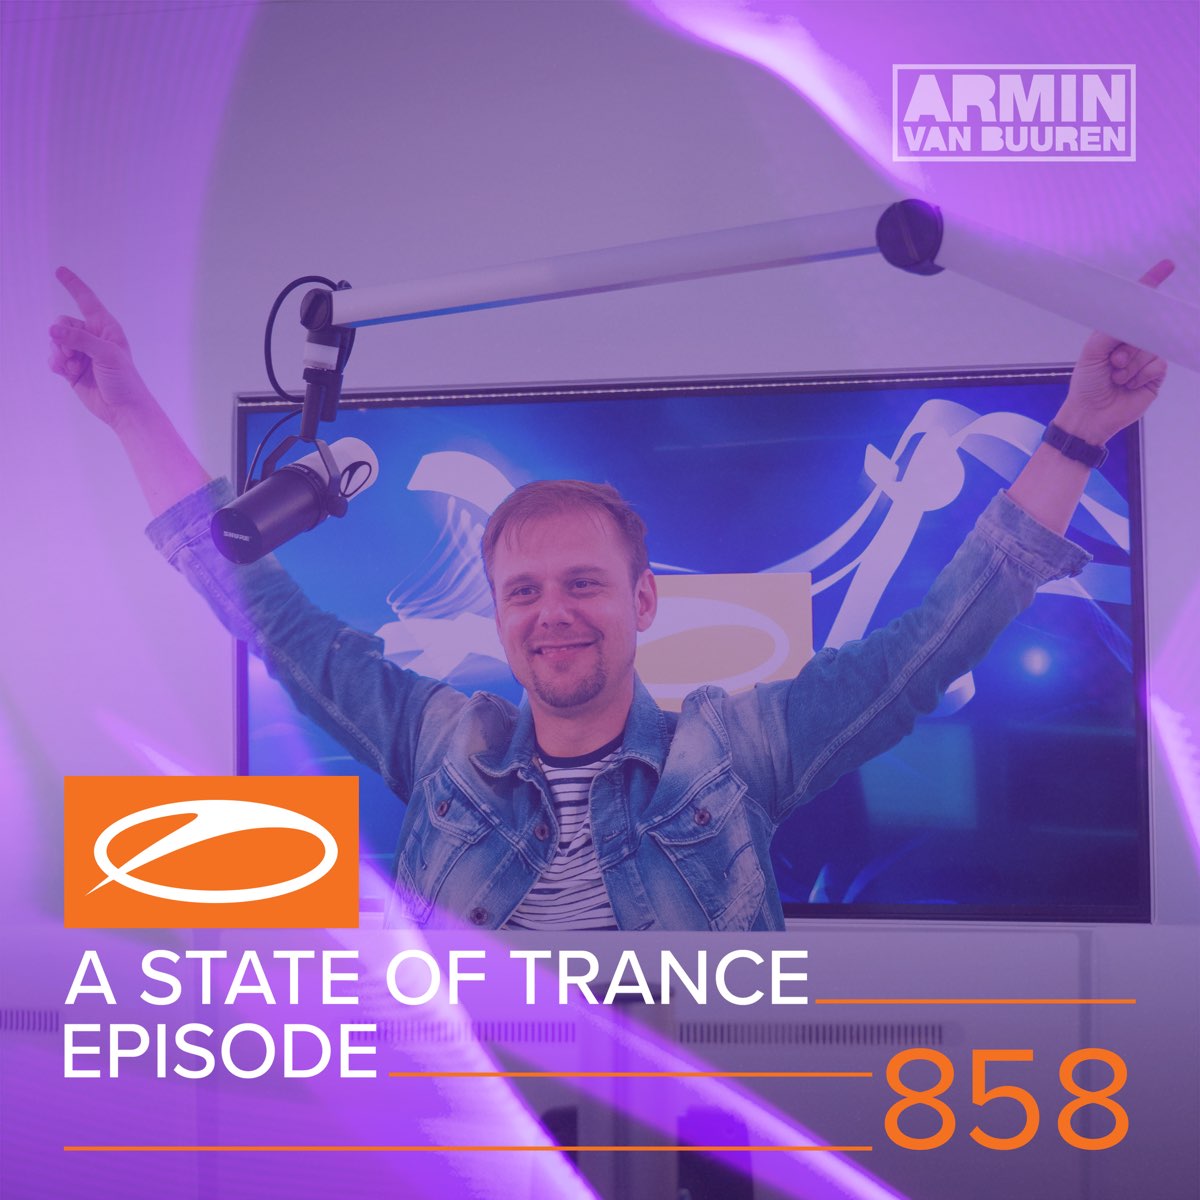 A State of Trance Episode 858 de Armin van Buuren.